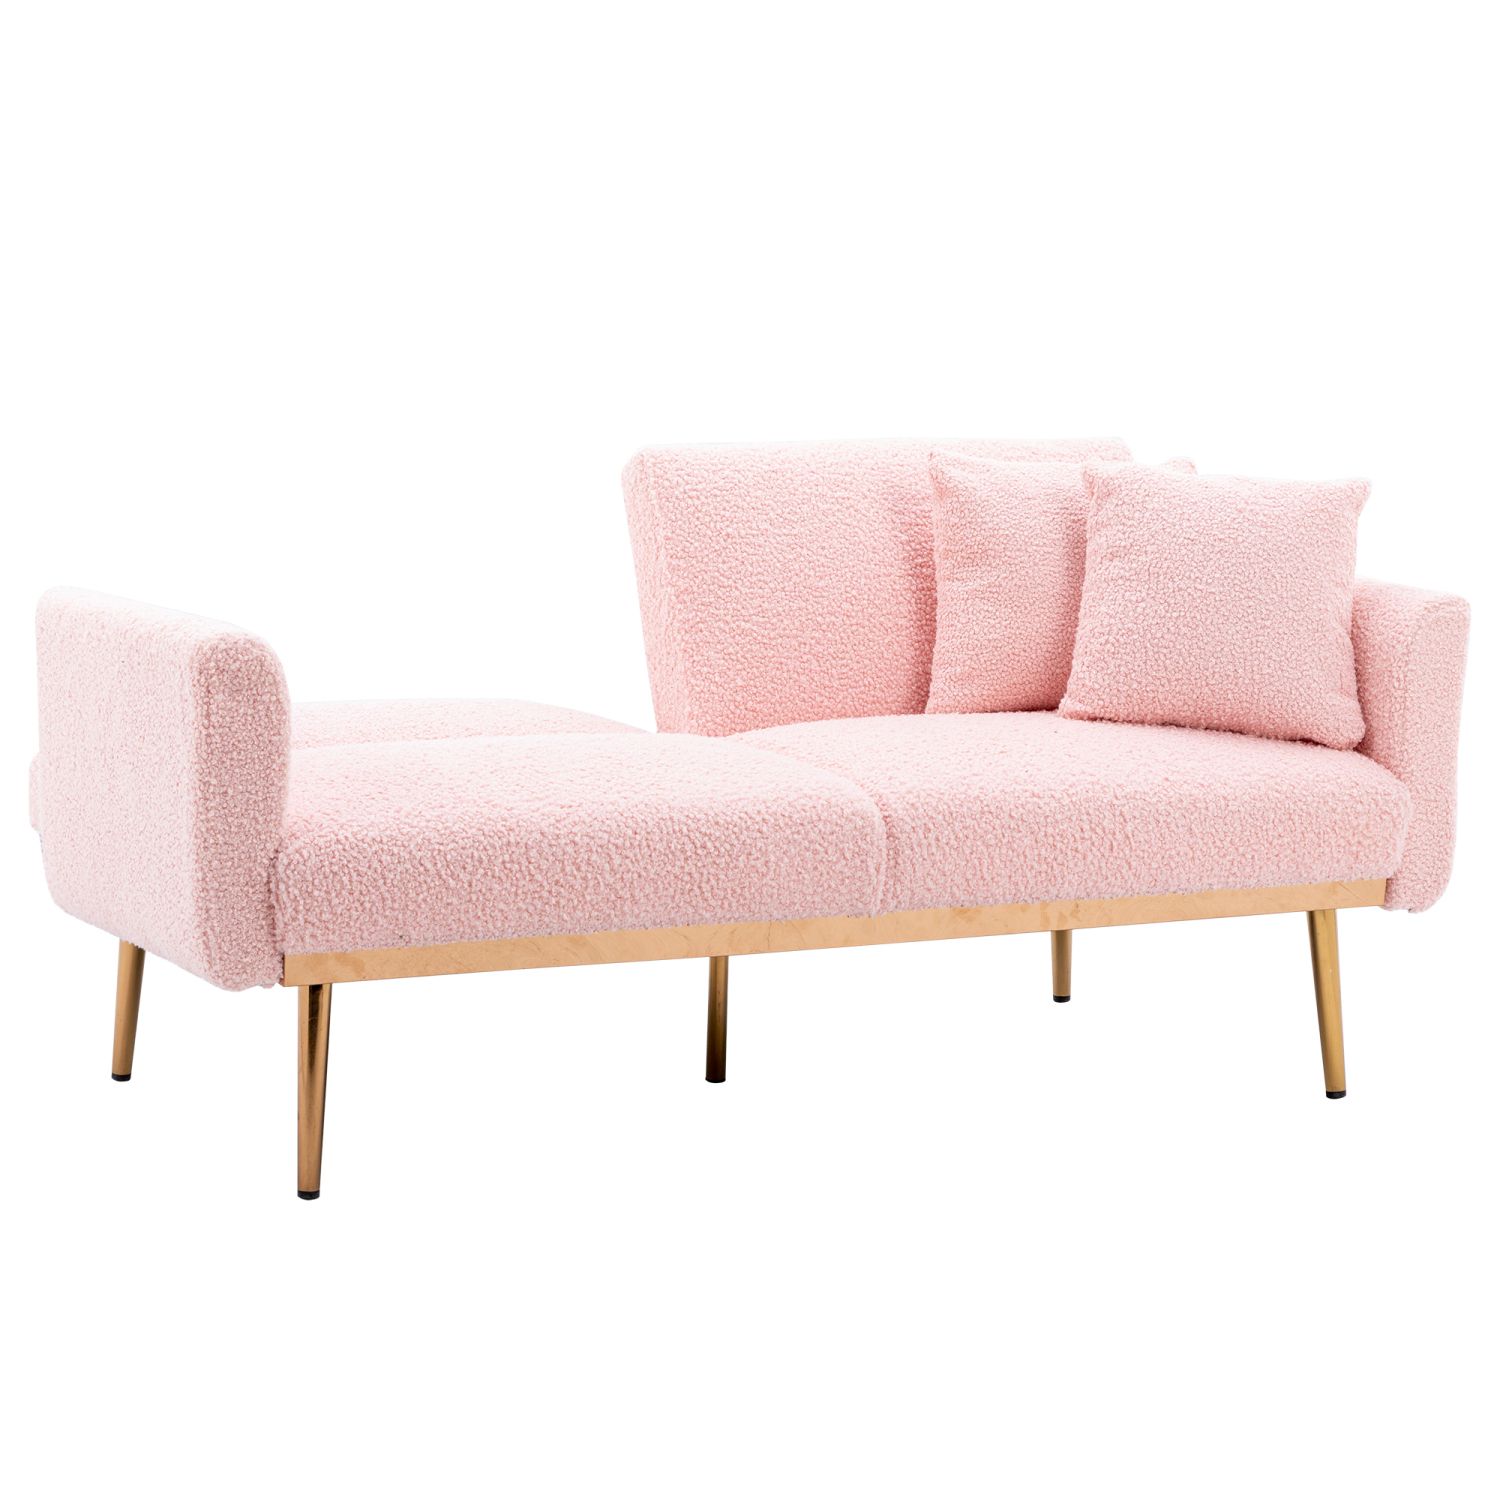 JASMODER 30.71-in Modern Pink Teddy Velvet Sofa at Lowes.com